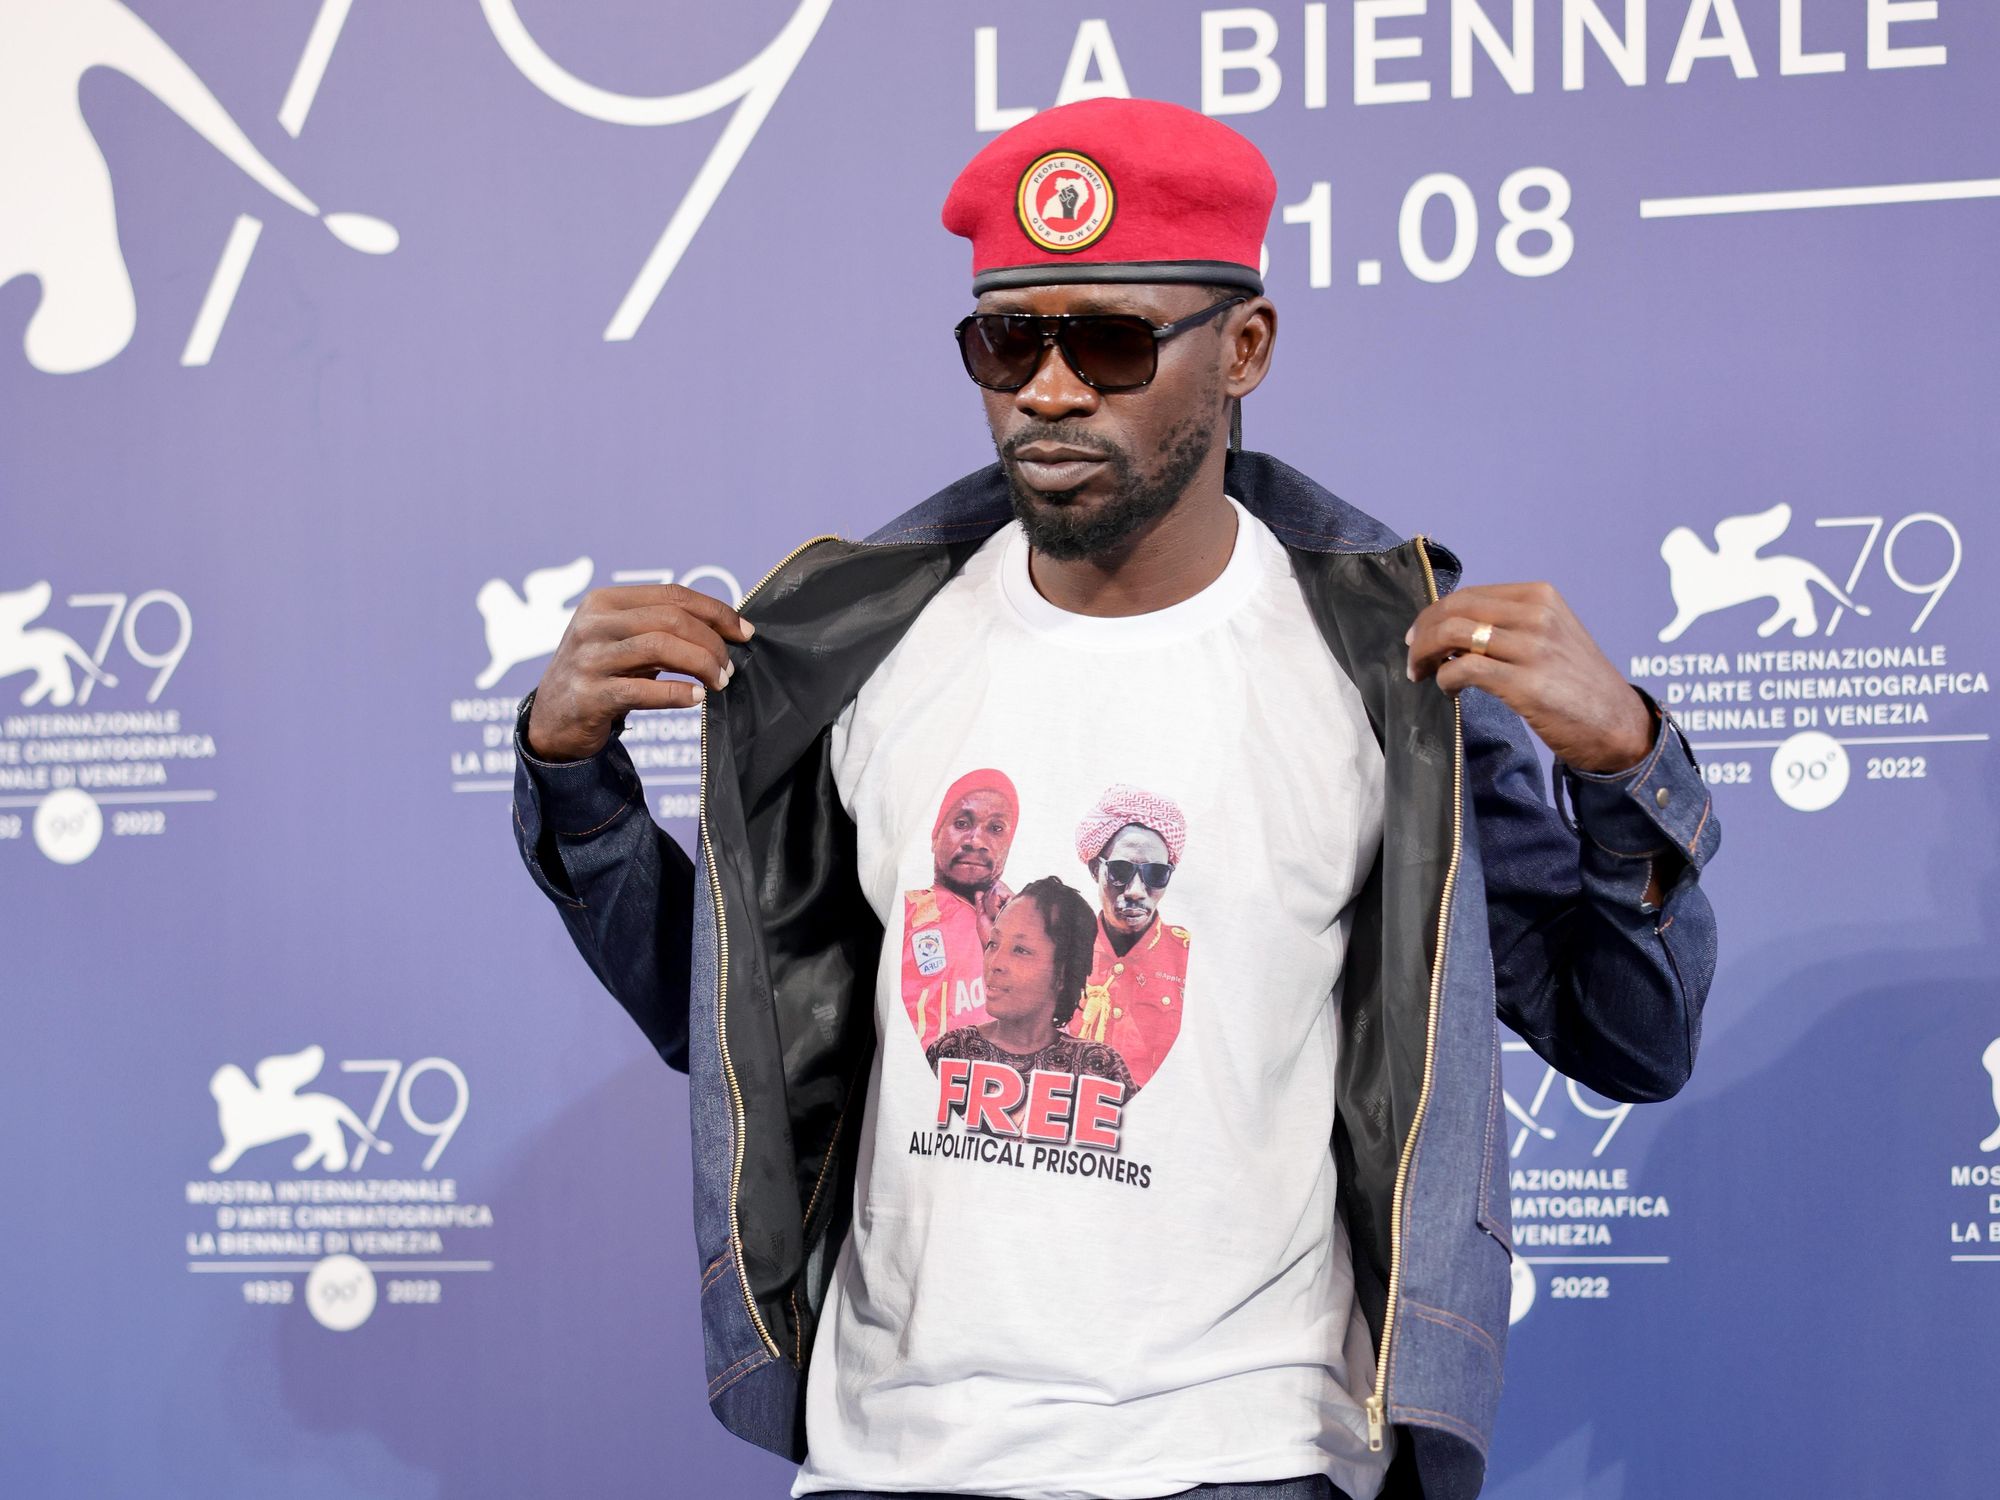 Ugandan musician and politician Bobi Wine poses at the 79th Venice International Film Festival 